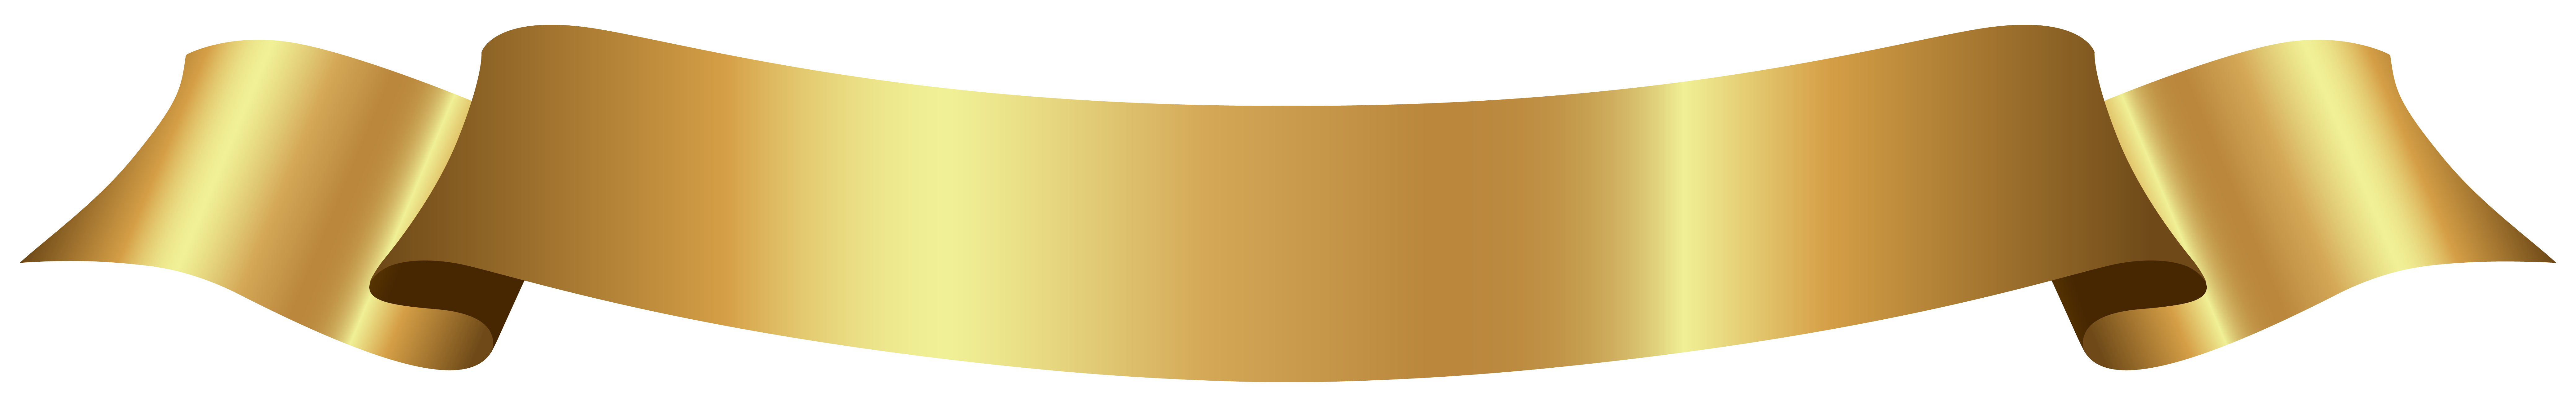 Golden Banner PNG Clipart Image 